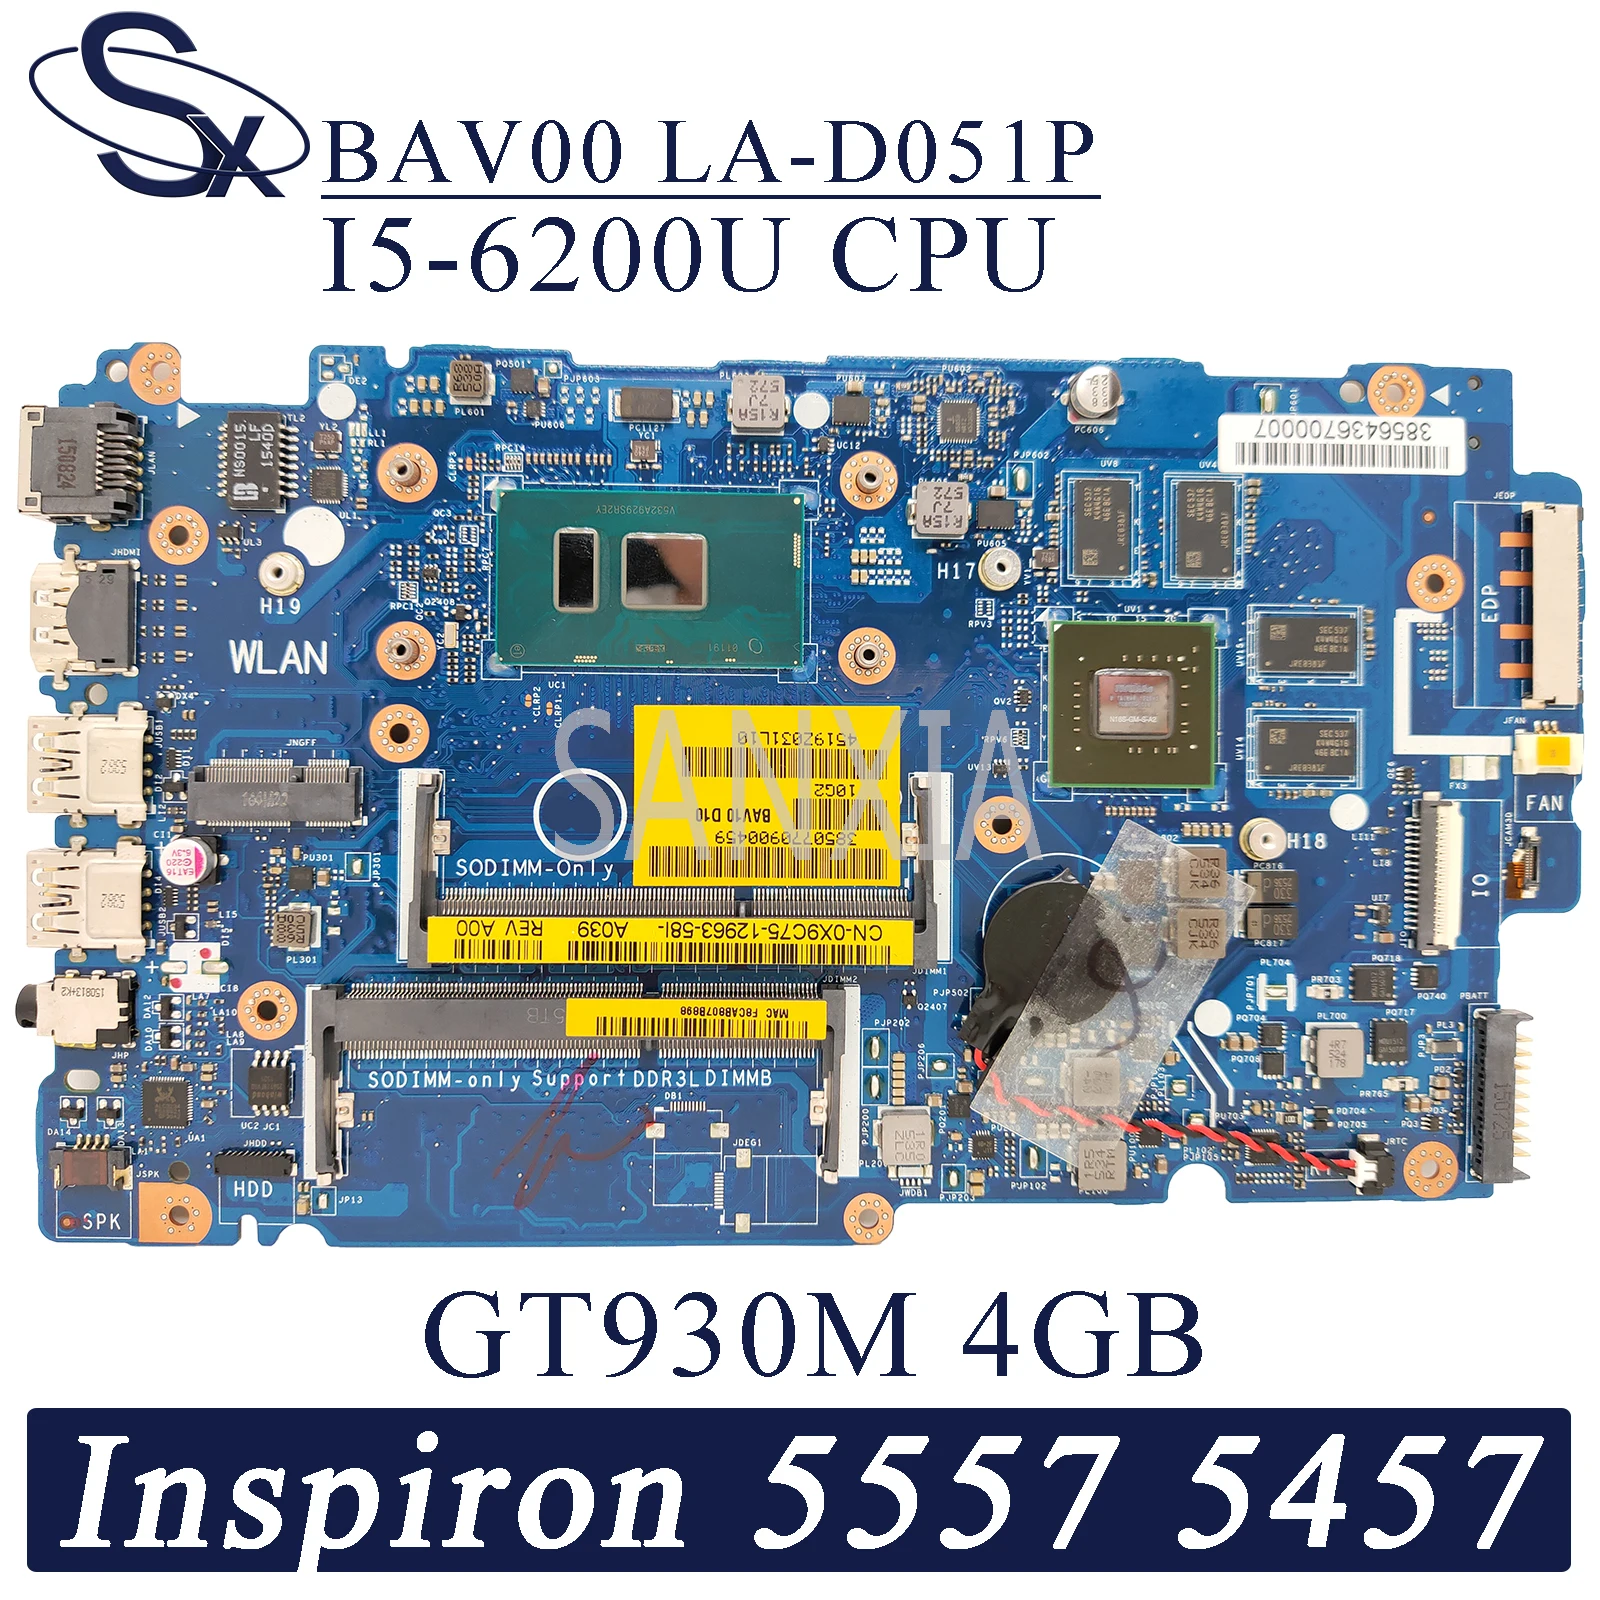 US $172.05 KEFU BAV00 LAD051P Laptop motherboard for Dell Inspiron 155557 145457 original mainboard I56200U GT930M4GB